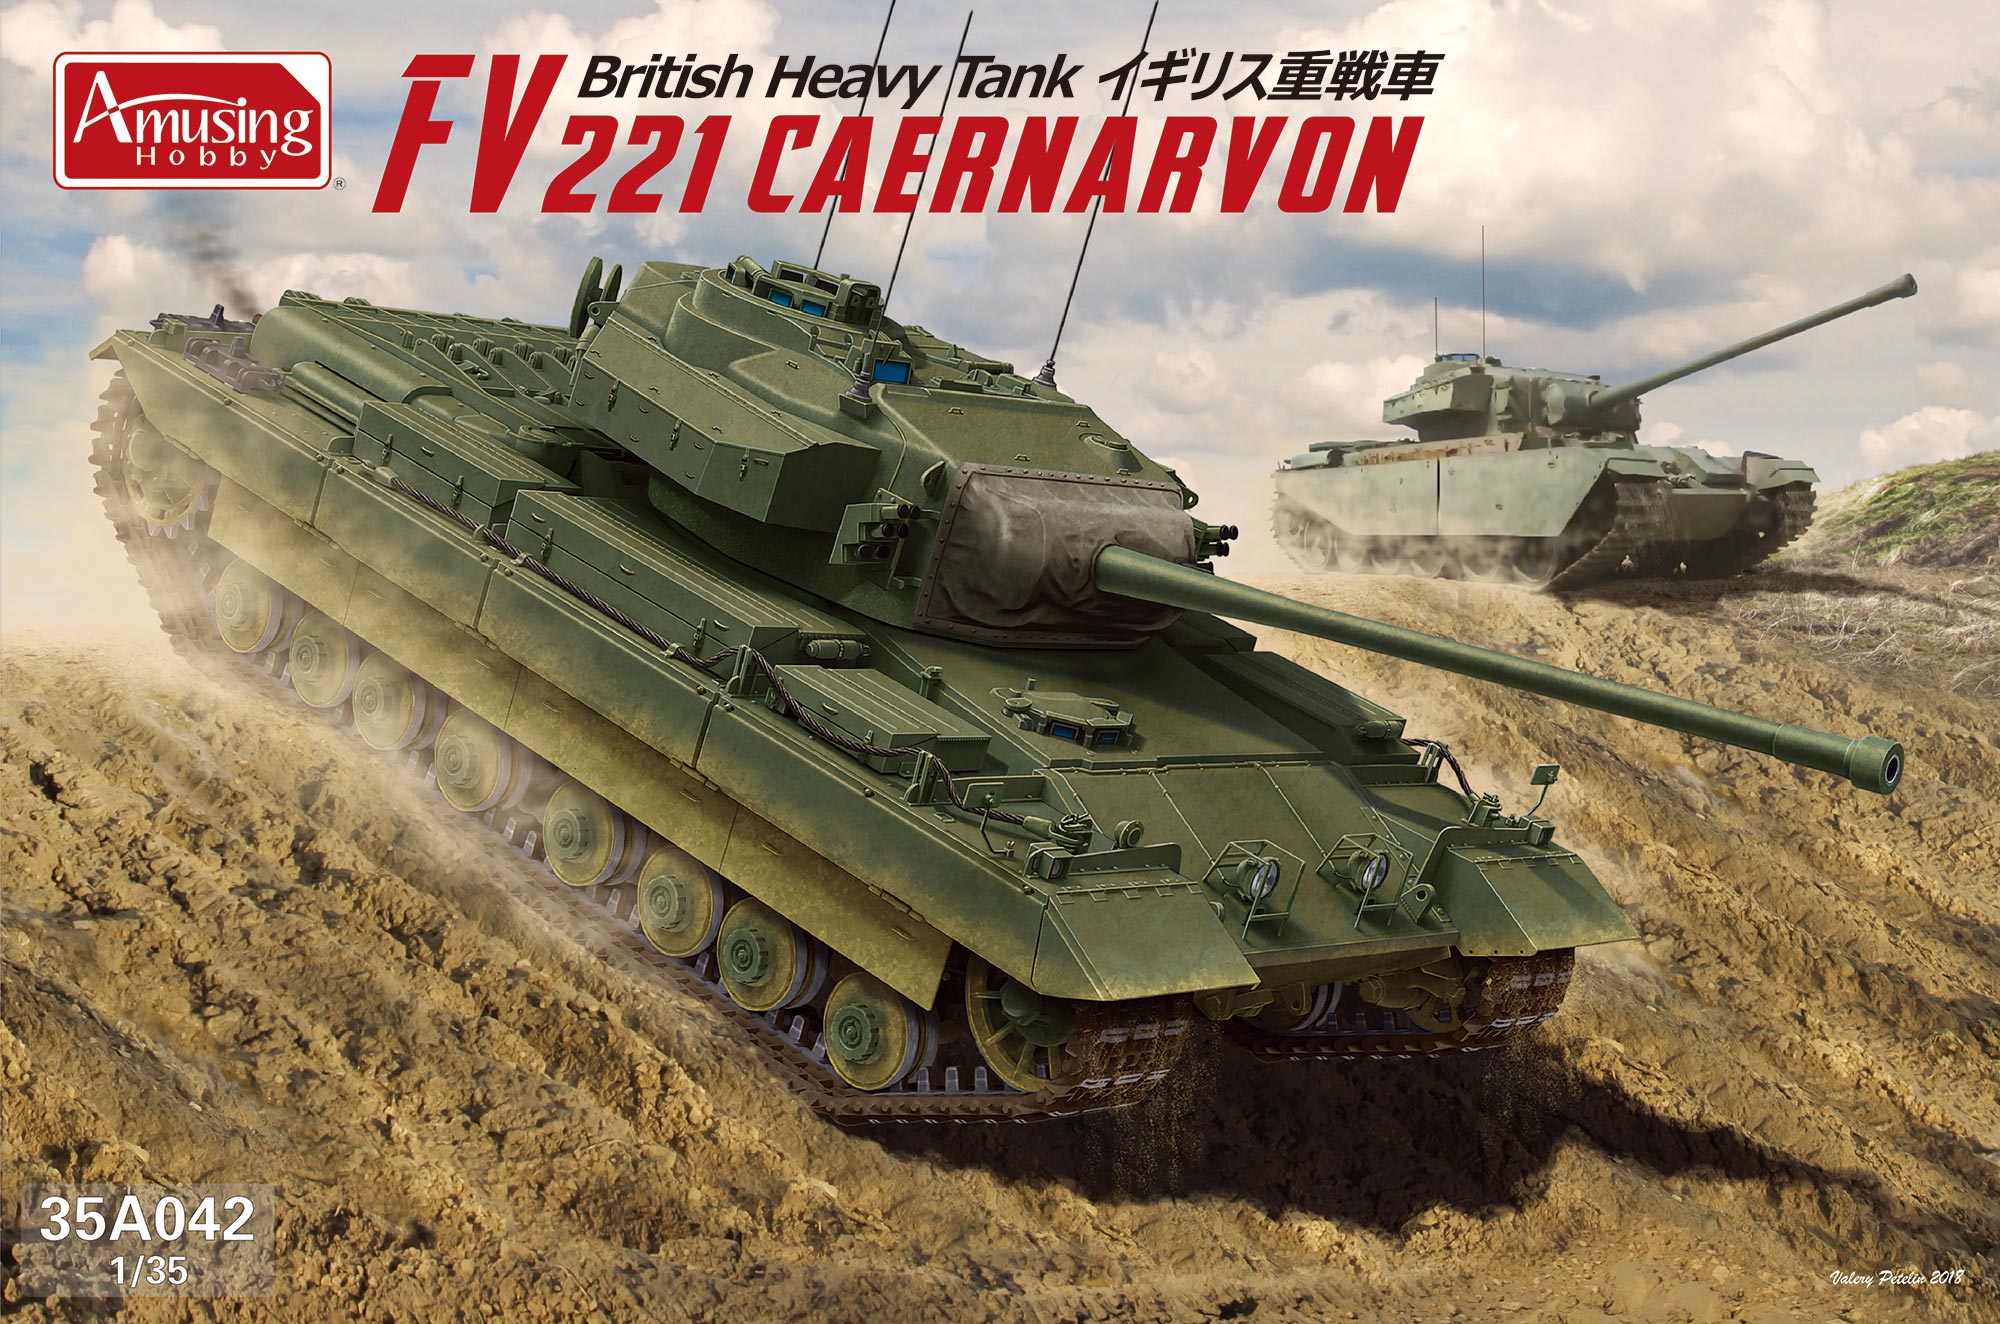 British heavy tank FV221 Caernarvon